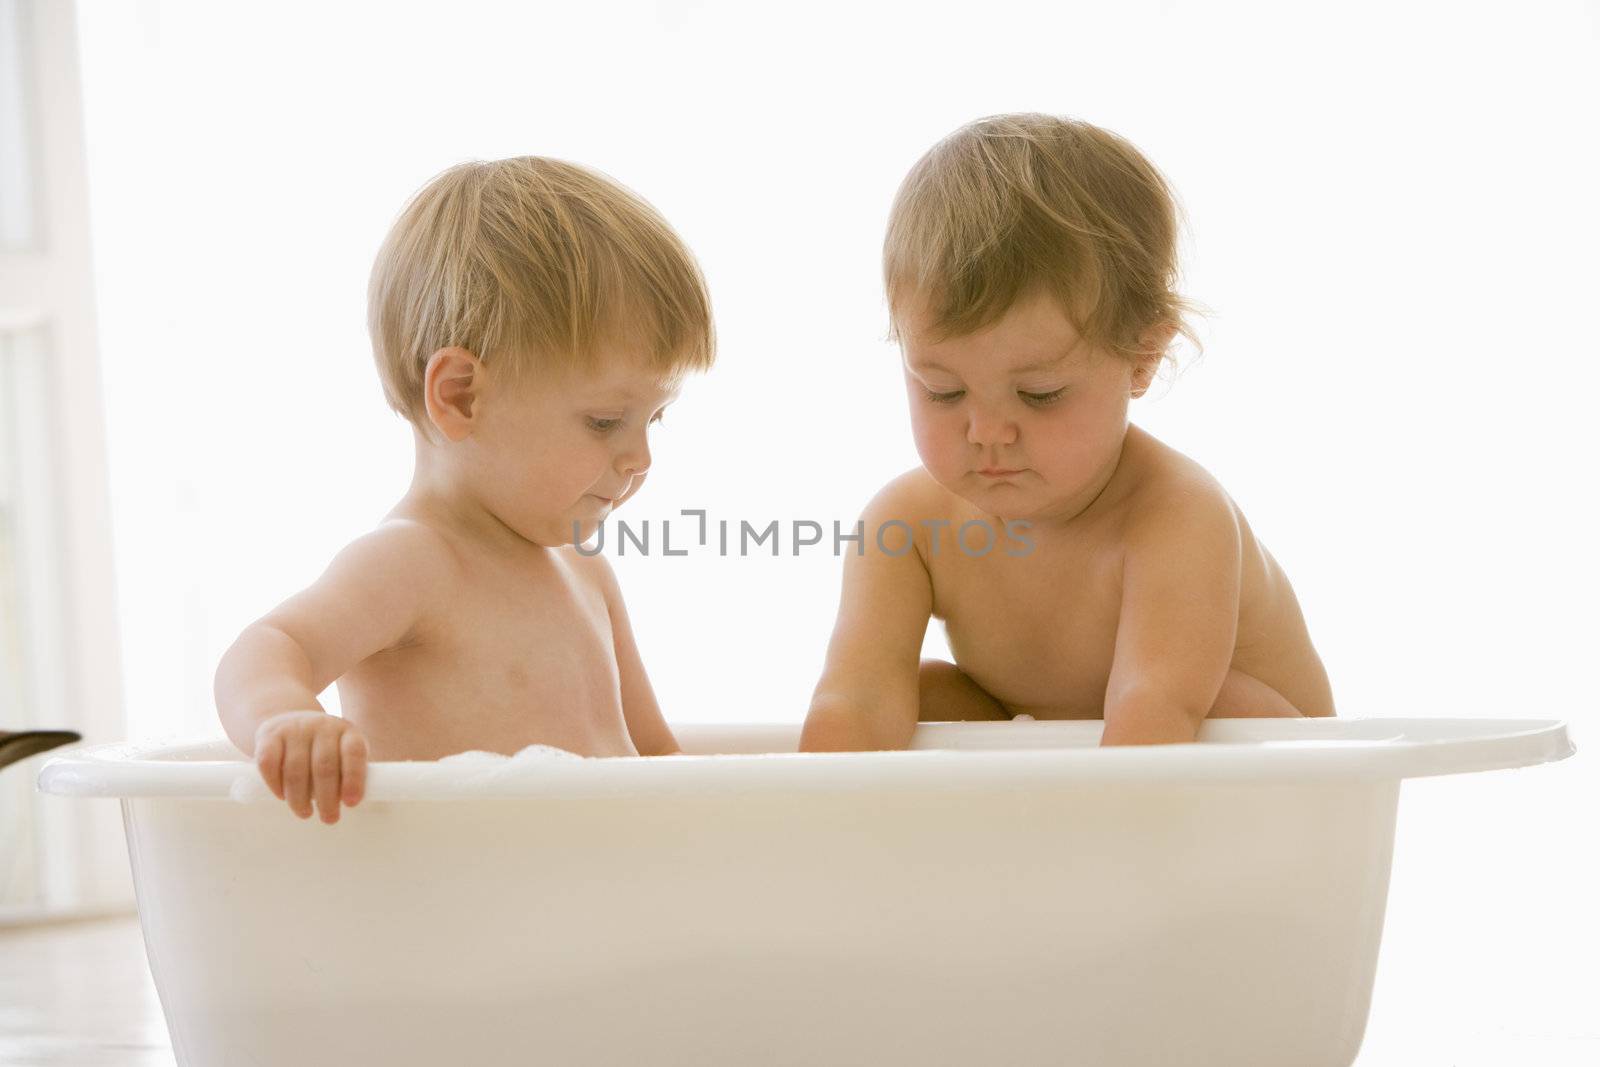 Two babies in bubble bath by MonkeyBusiness